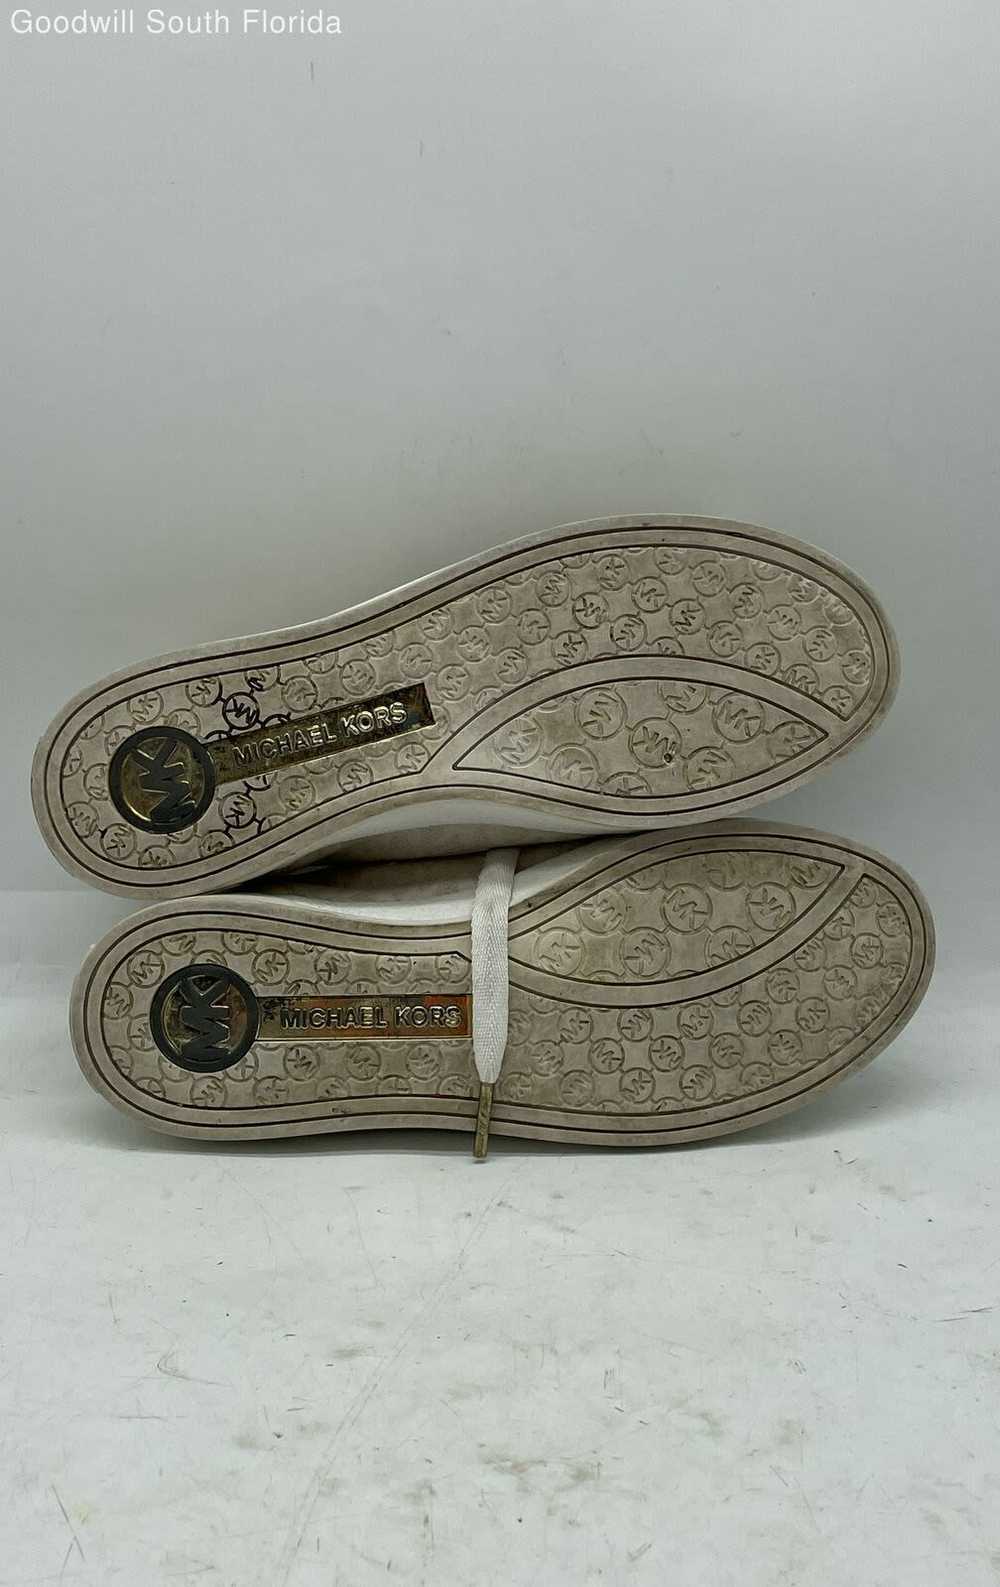 Michael Kors Womens White Shoes Size 5M - image 5